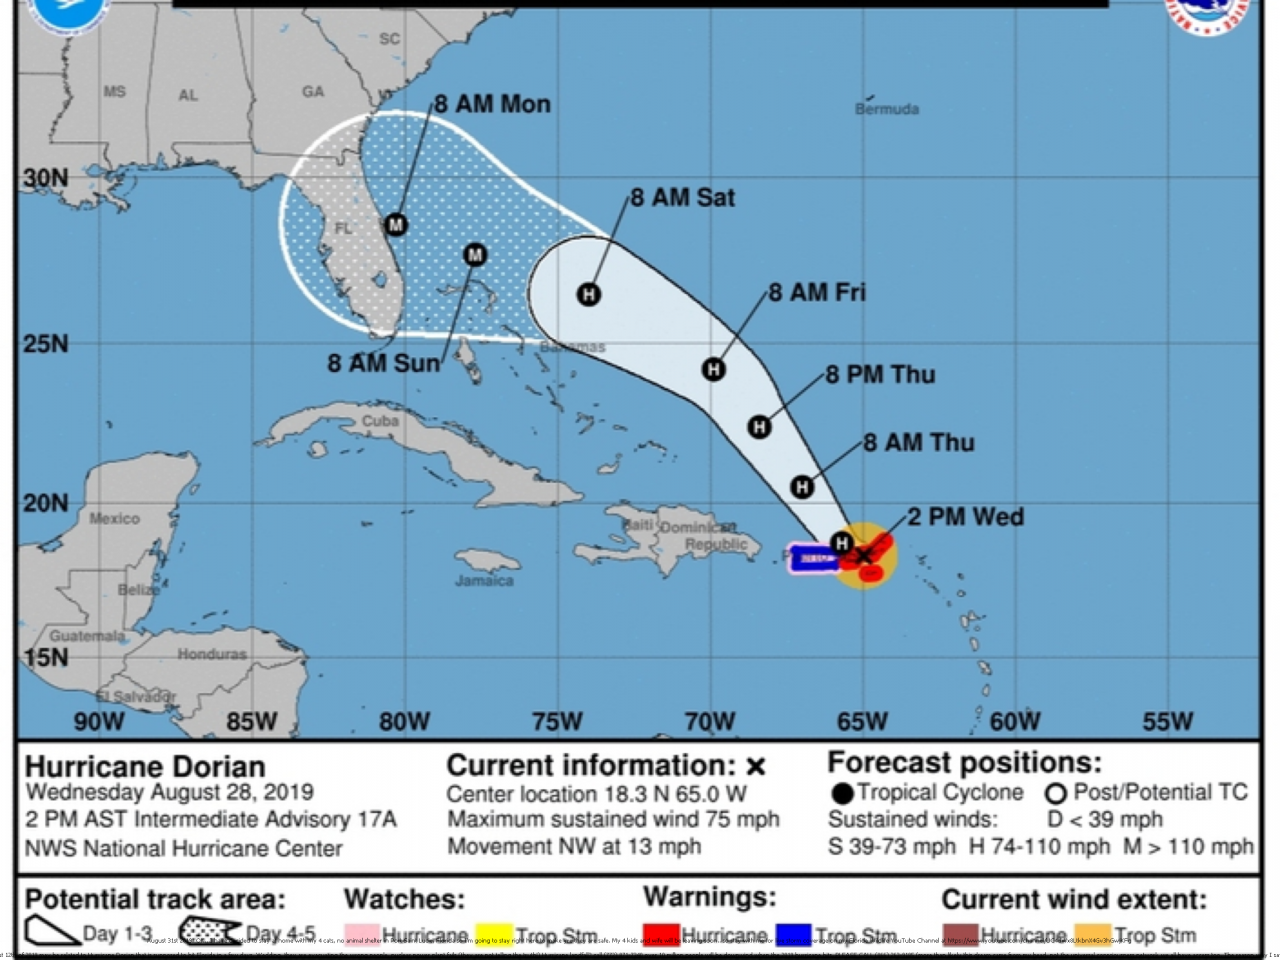 Hurricane Dorian Aug 2019 prediction by Psychic Brian Ladd images q3Dtbn ANd9GcRfpHpIIZfqXSFnaBls3HmPuyUWo7yc-j0uV9sEhkQ1nlmYdh nMw
Hurricane Dorian Aug 2019 prediction by Psychic Brian Ladd images q3Dtbn ANd9GcRfpHpIIZfqXSFnaBls3HmPuyUWo7yc-j0uV9sEhkQ1nlmYdh nMw
